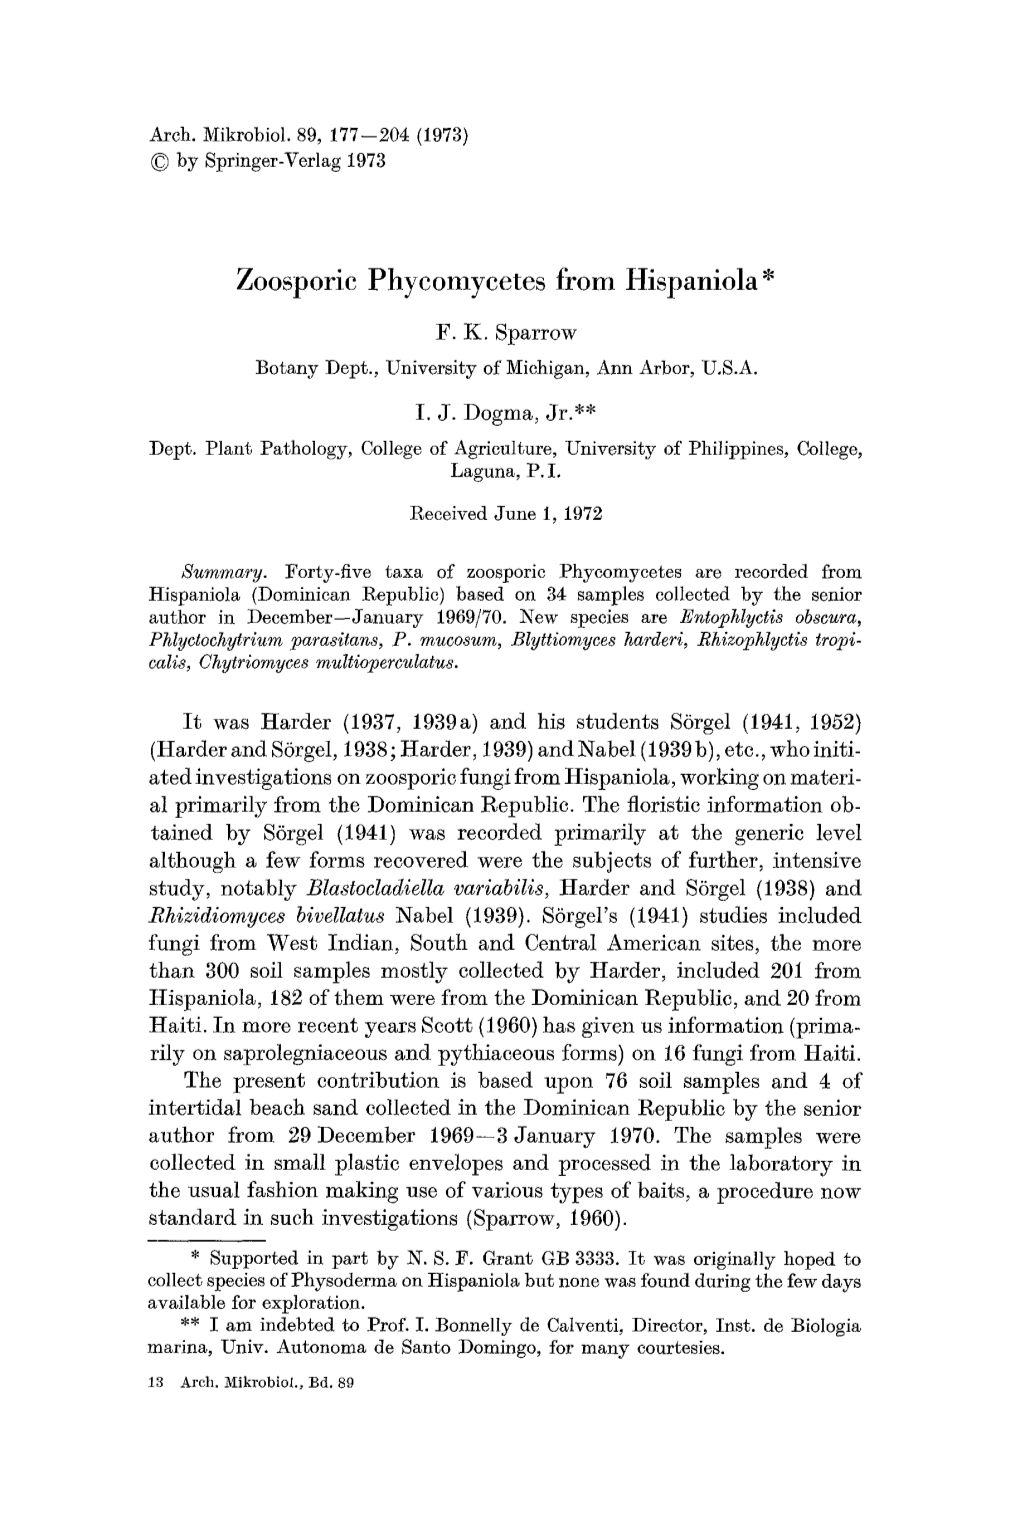 Zoosporic Phycomycetes from Hispaniola*